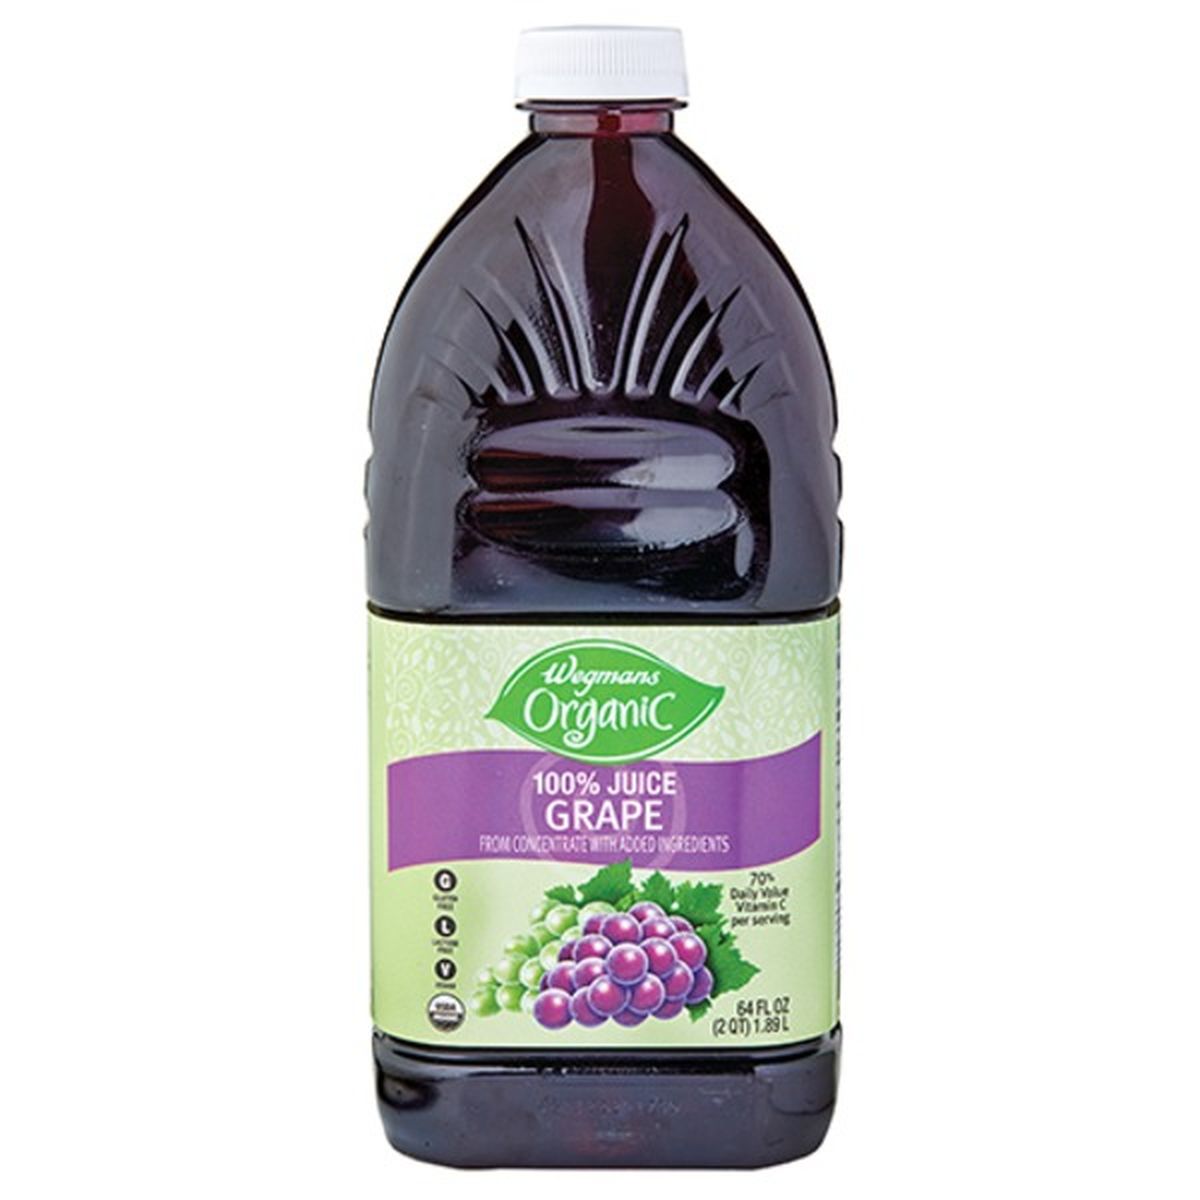 Calories in Wegmans Organic 100% Grape Juice